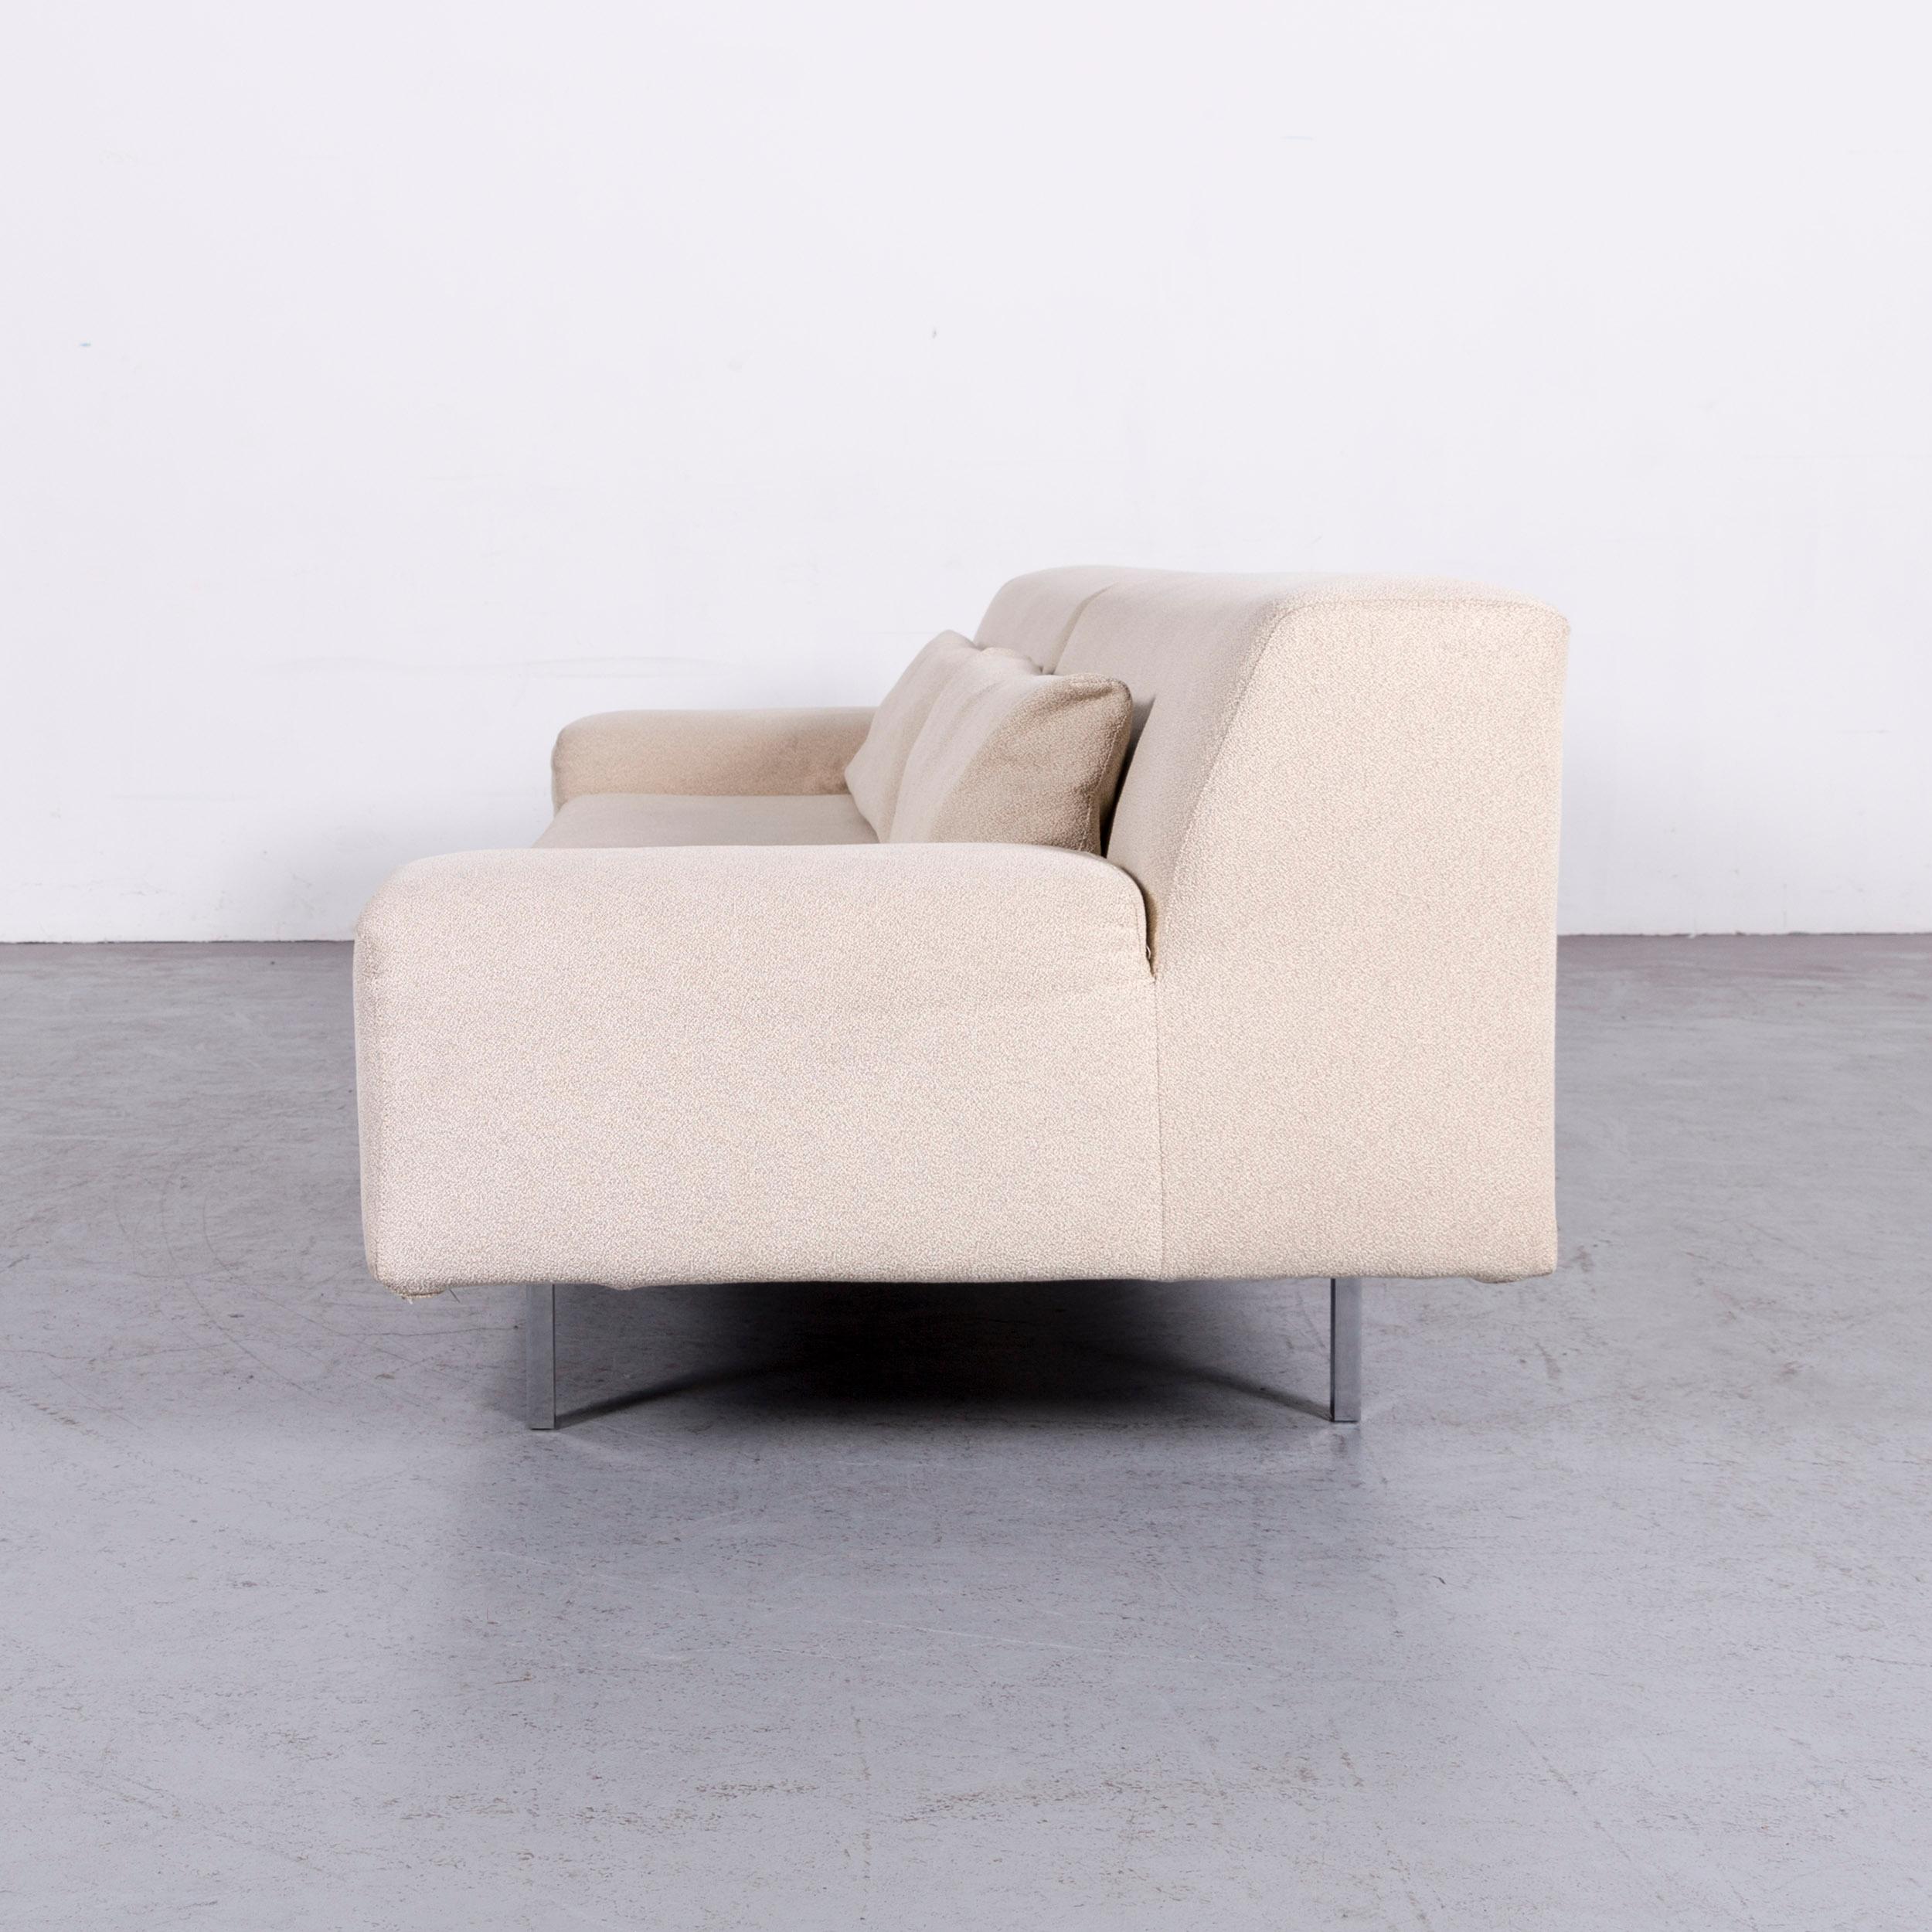 Molteni Designer Fabric Sofa Footstool Set Crème Three-Seat Couch For Sale 3